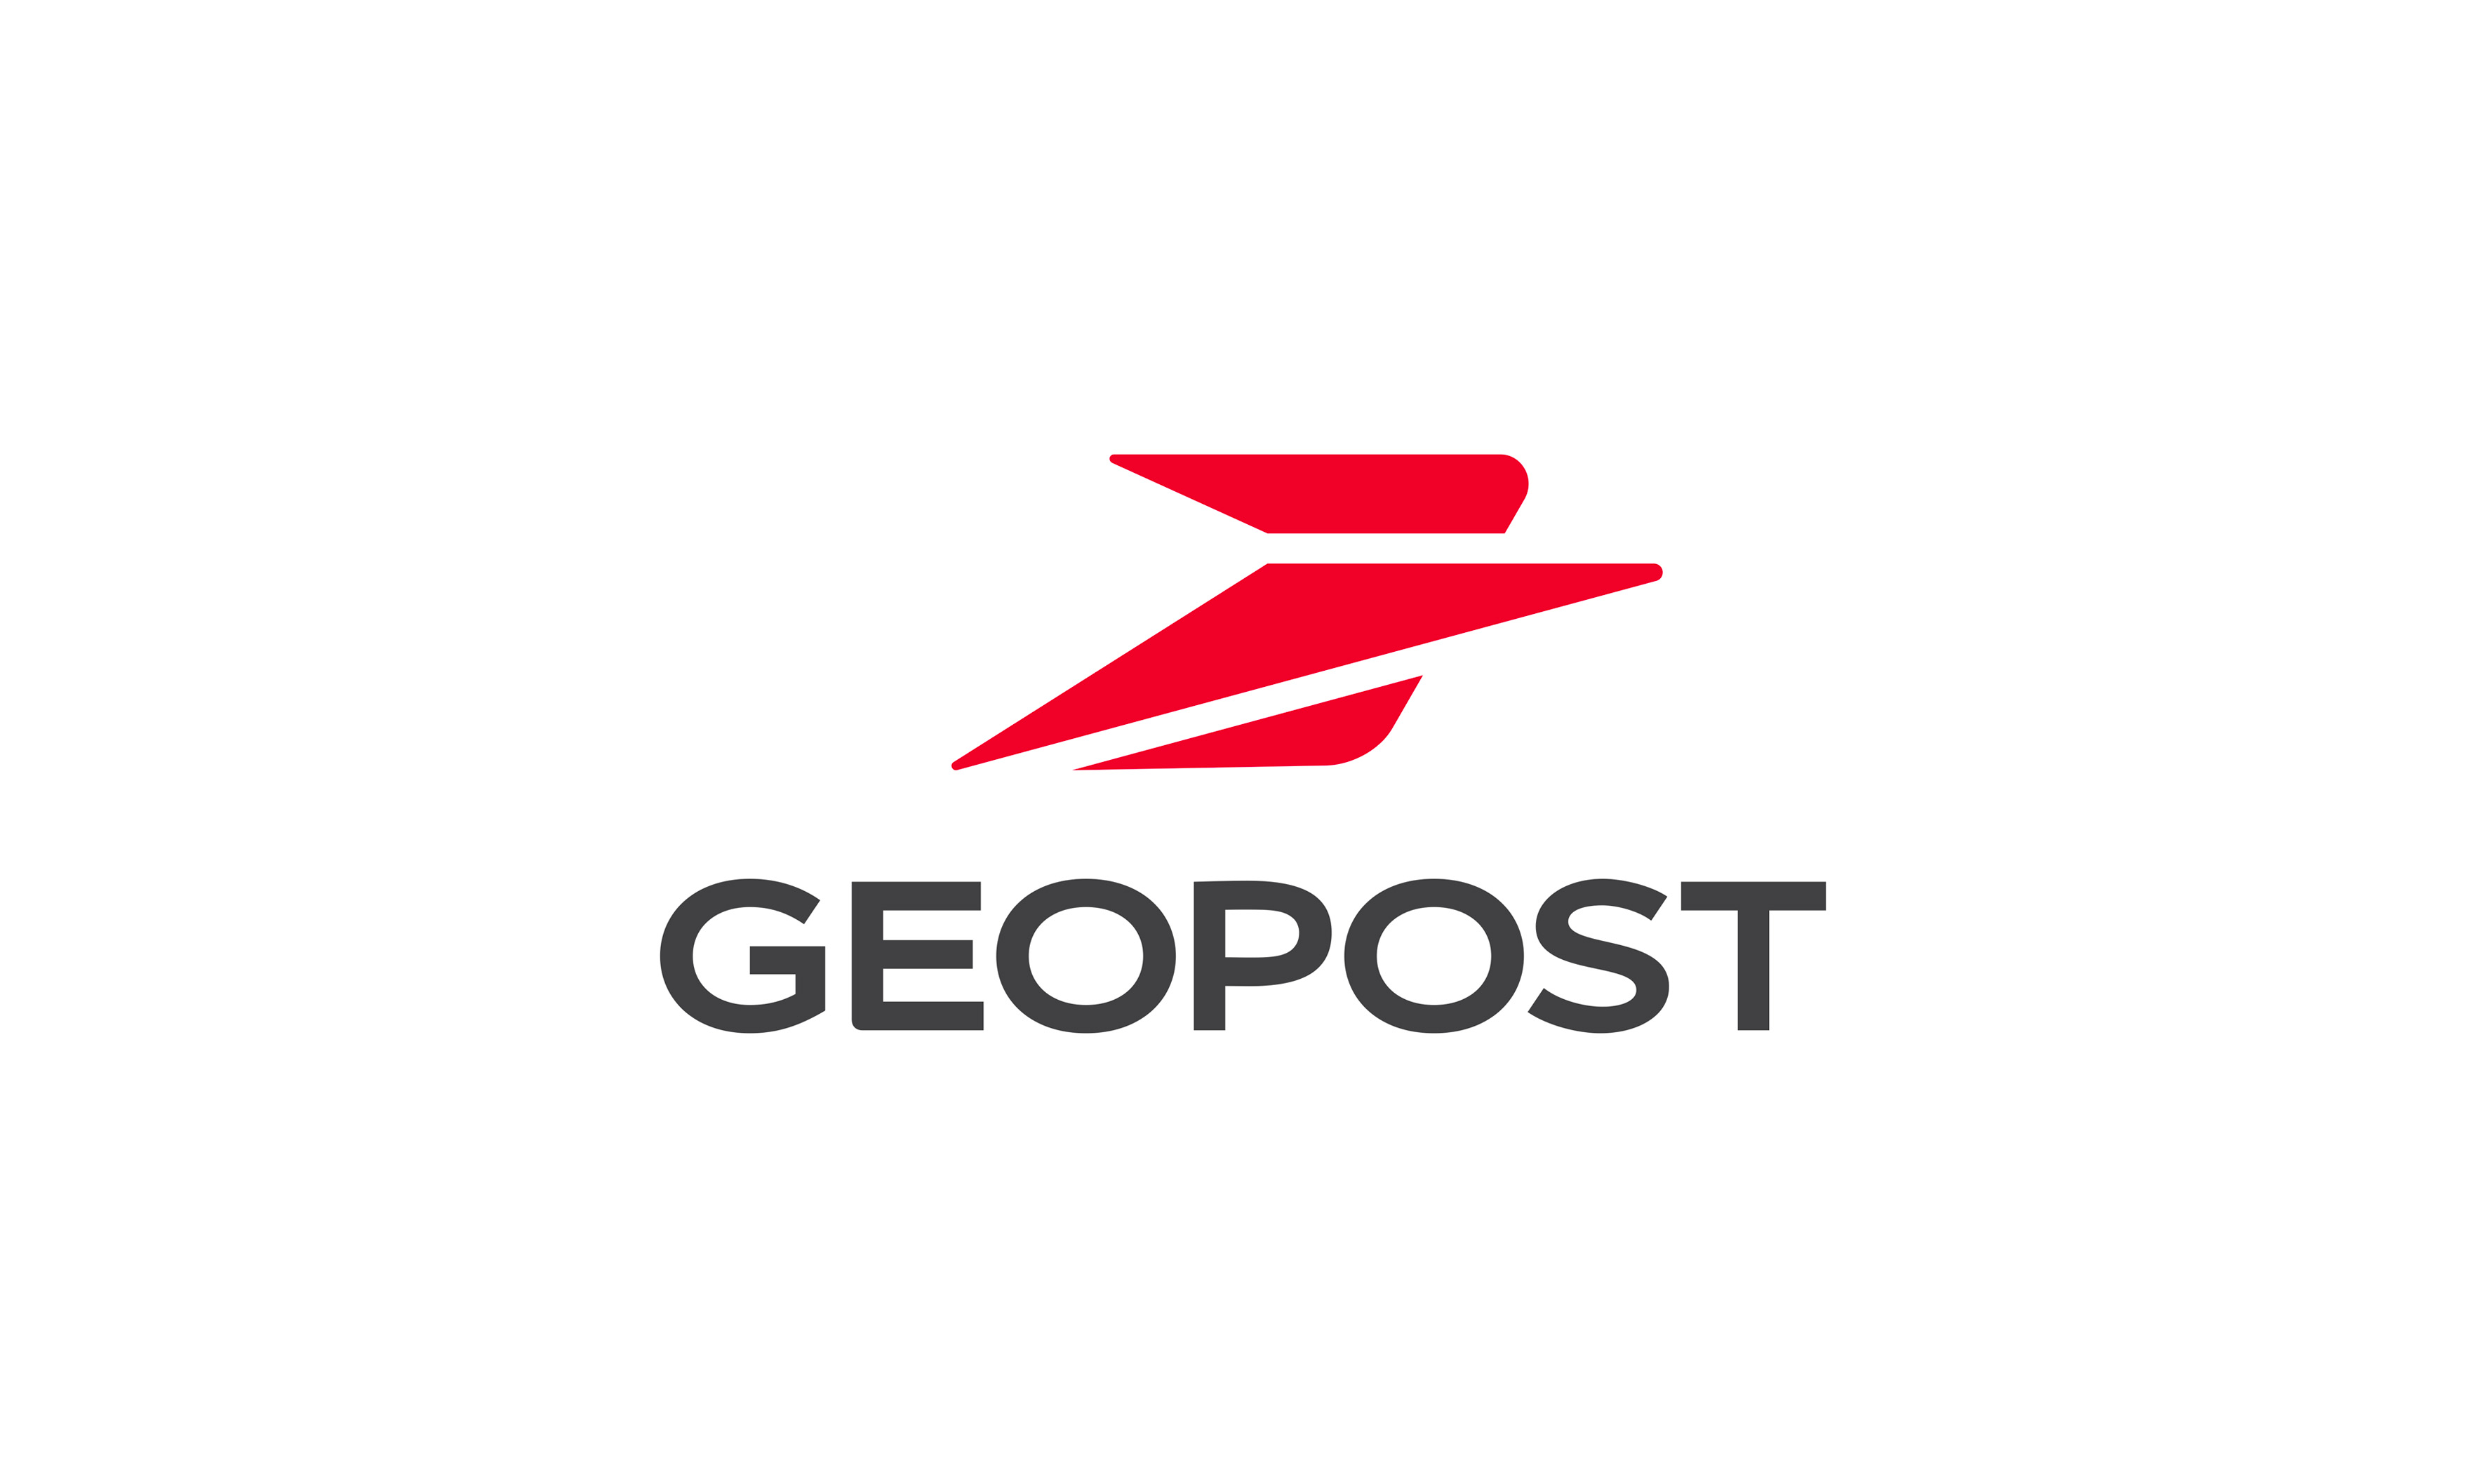 Geopost